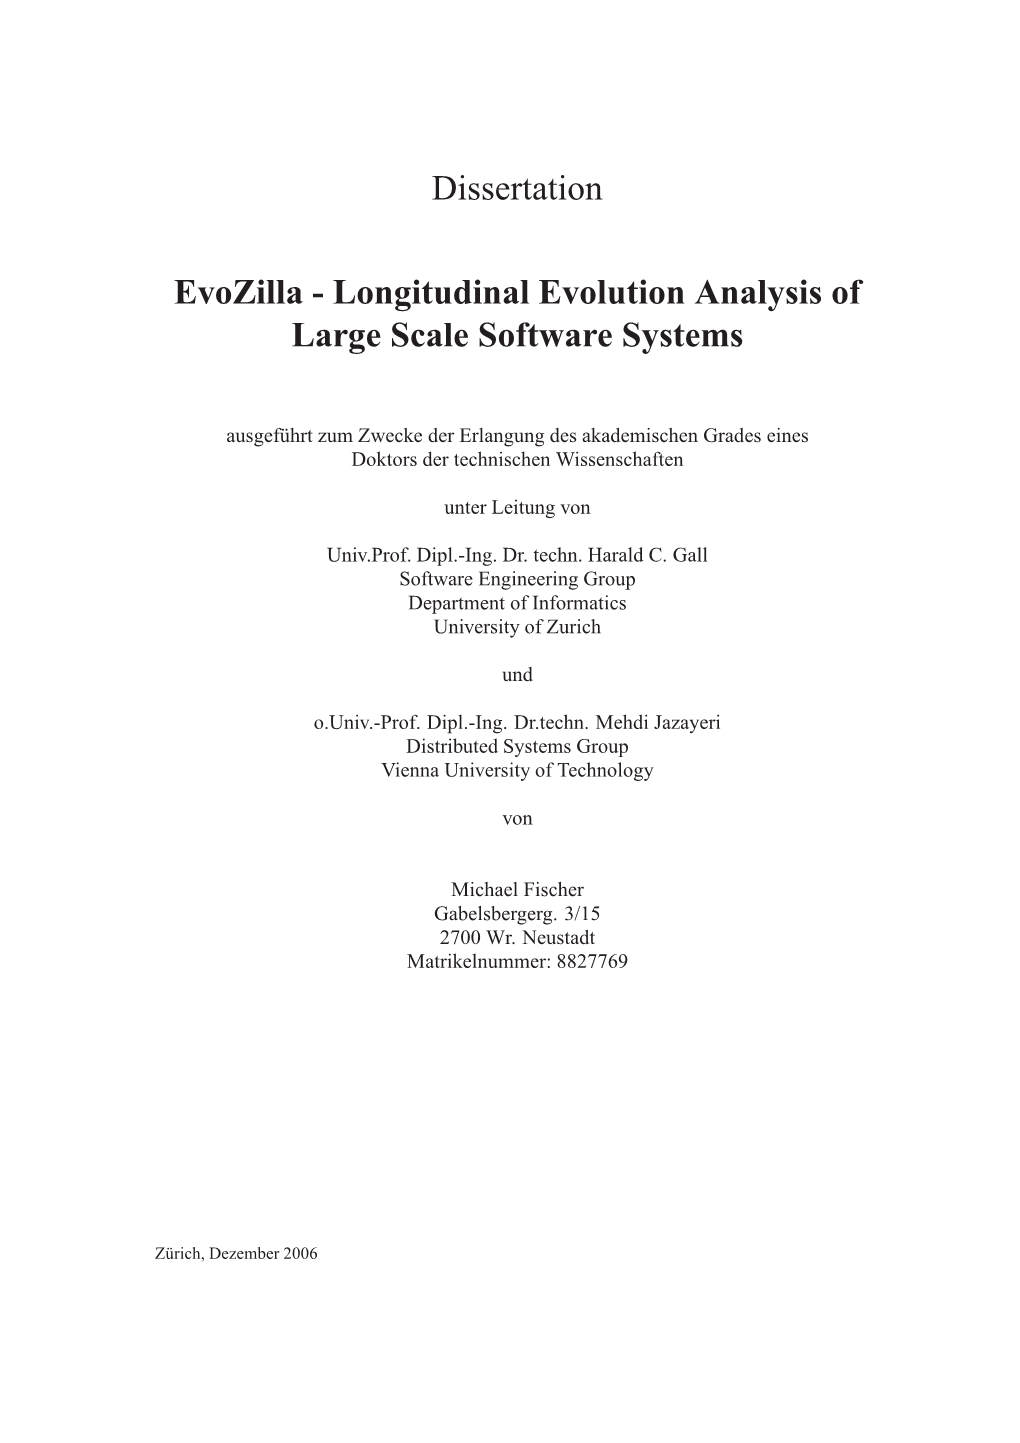 Evozilla-Longitudinal Evolution Analysis of Large Scale Software Systems